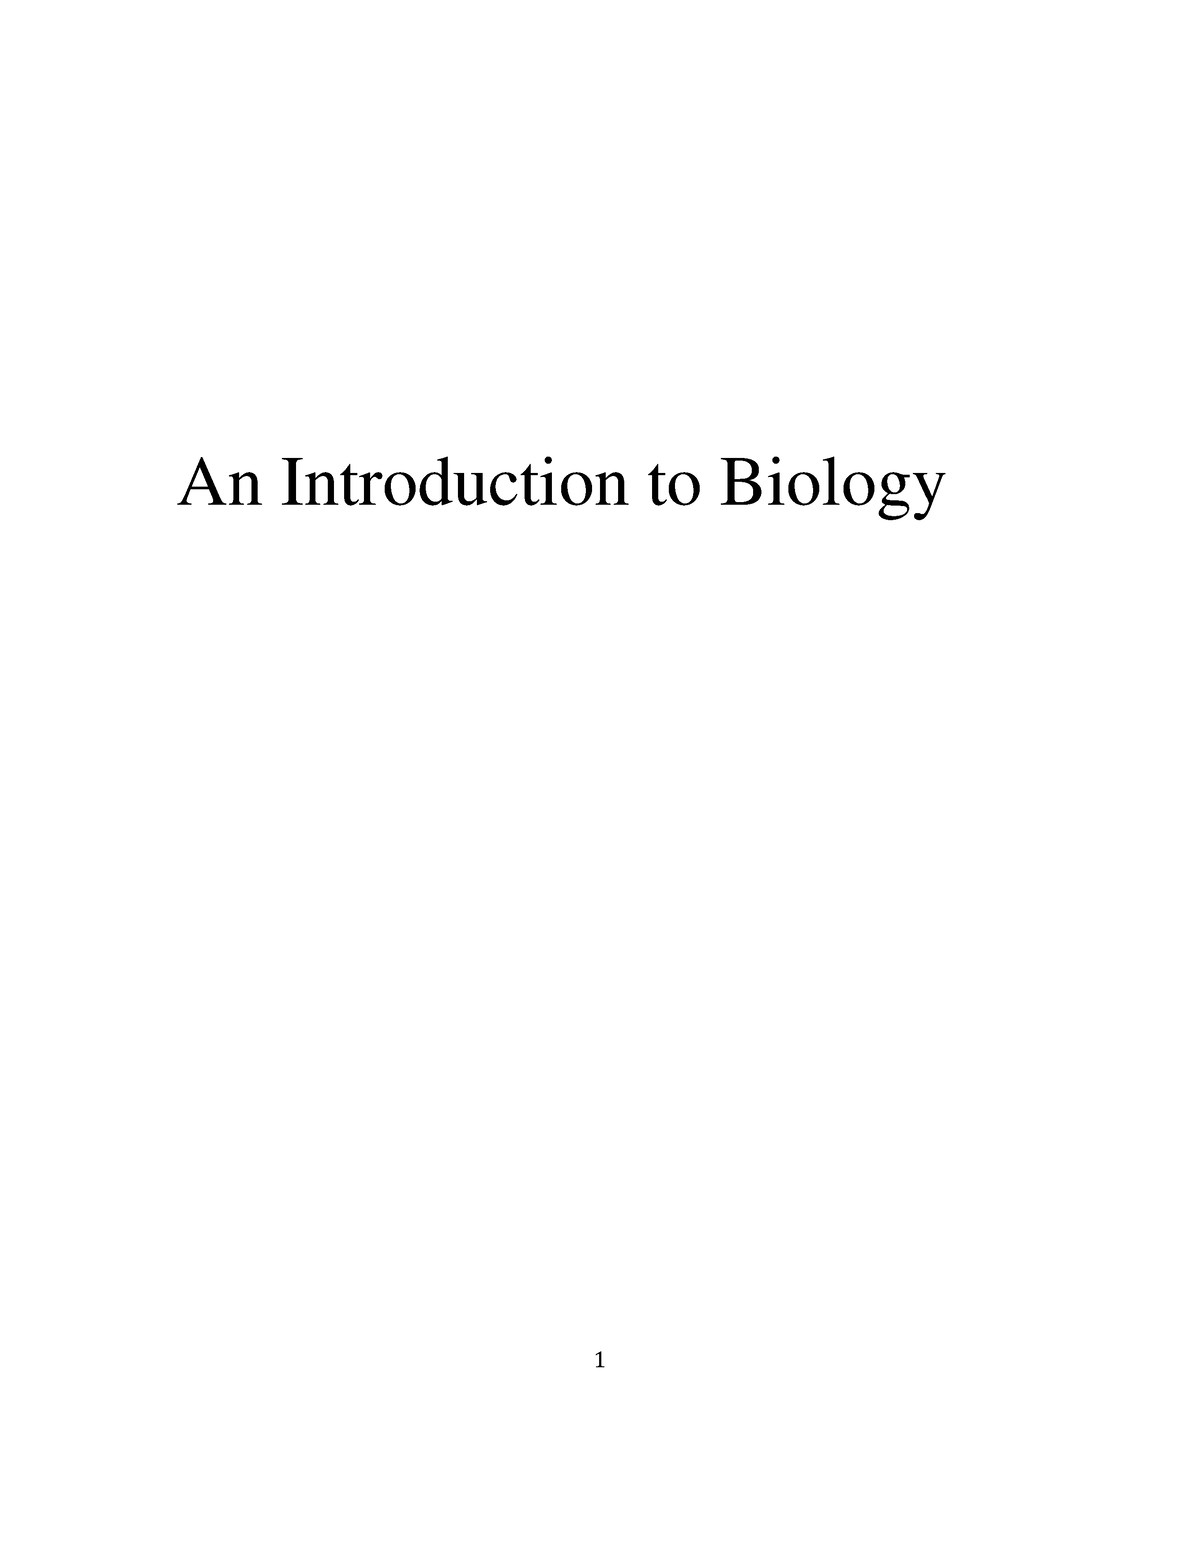 biology essay introduction